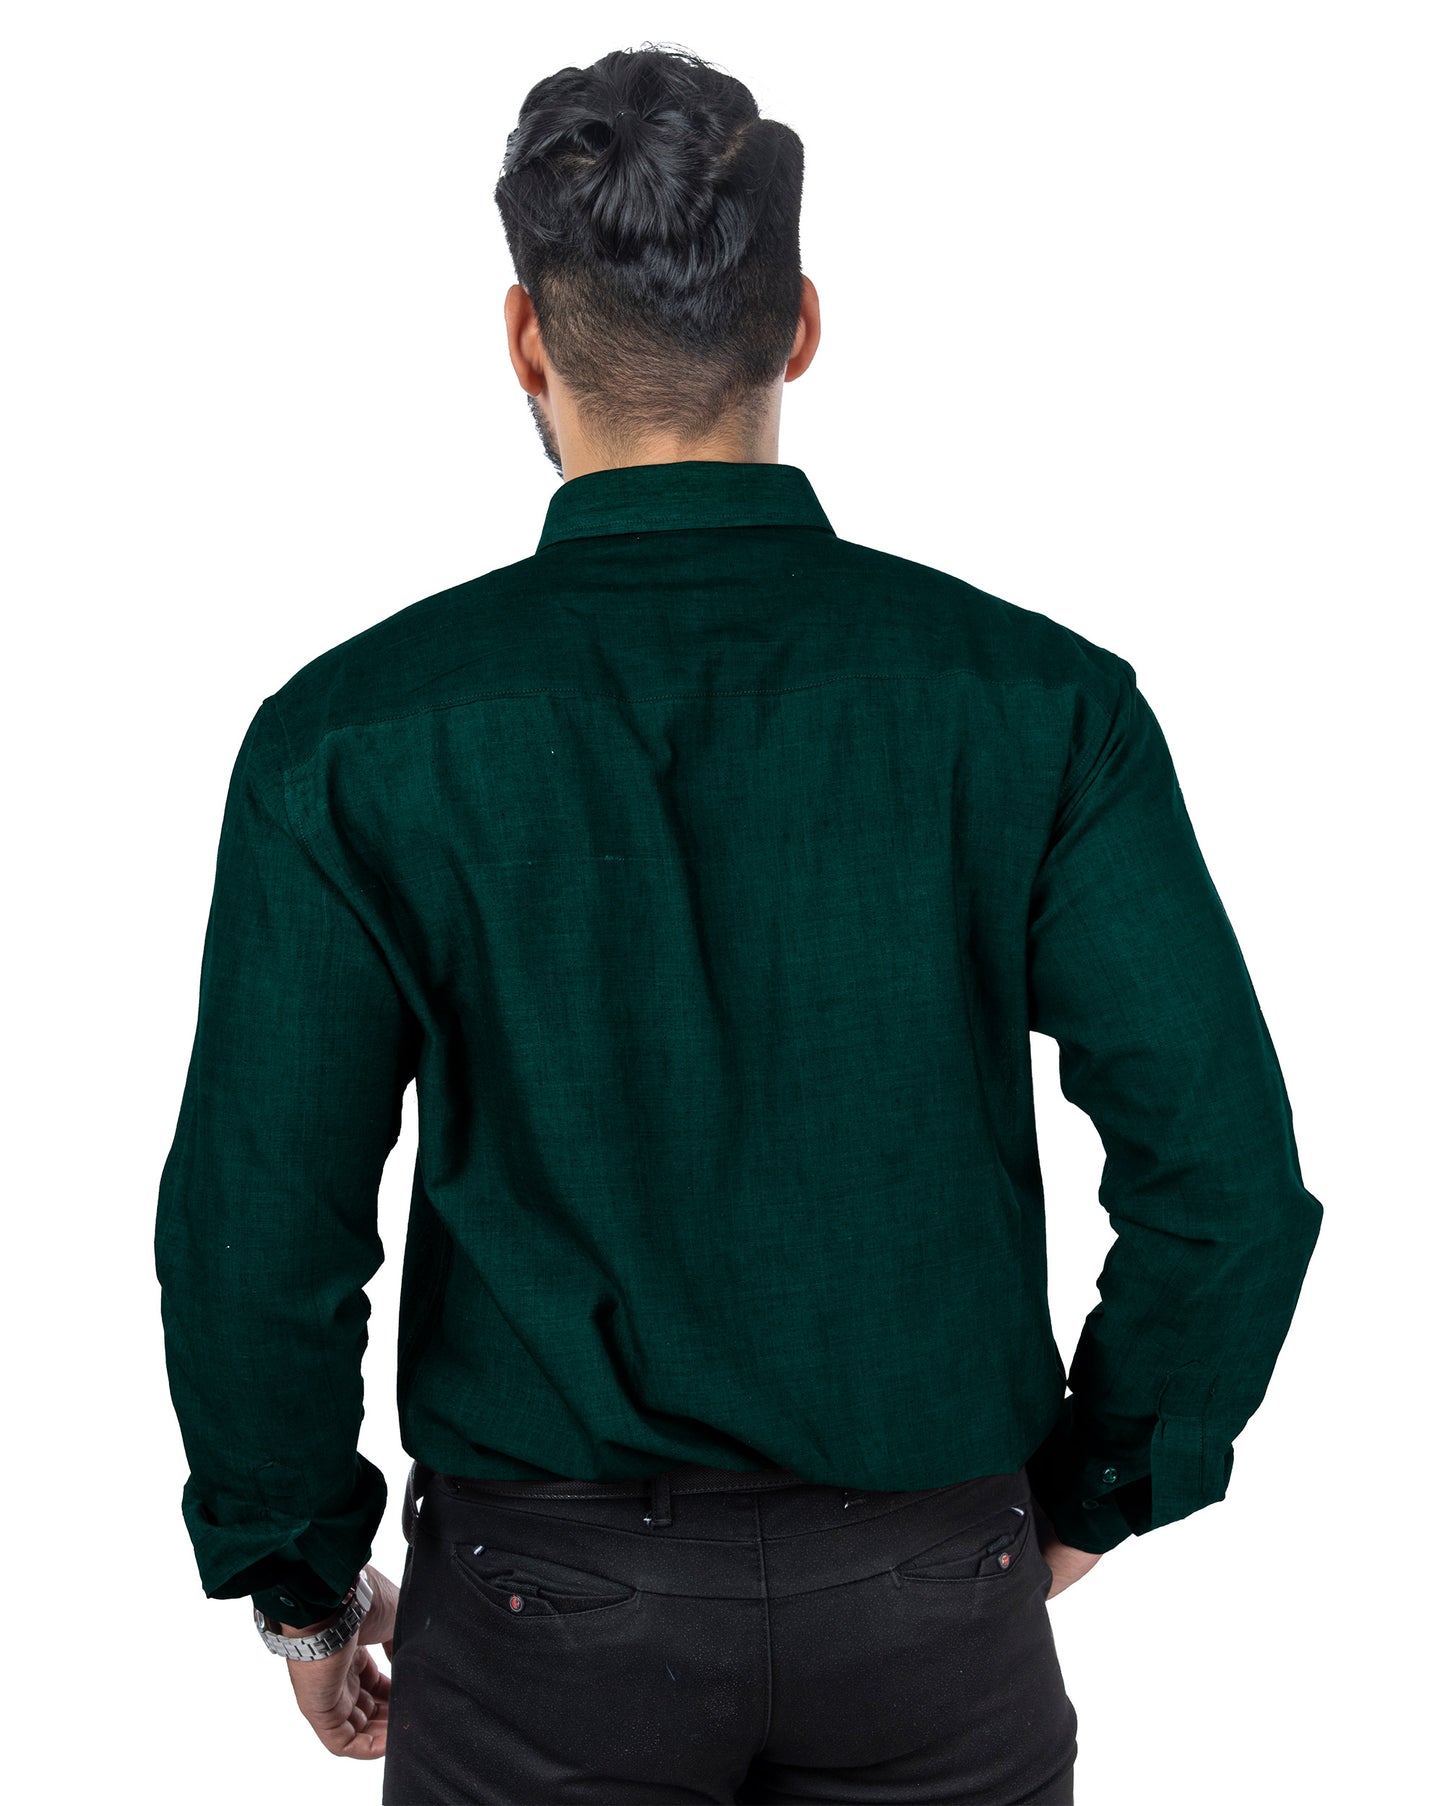 Full Sleeve Shirt Peacock Green